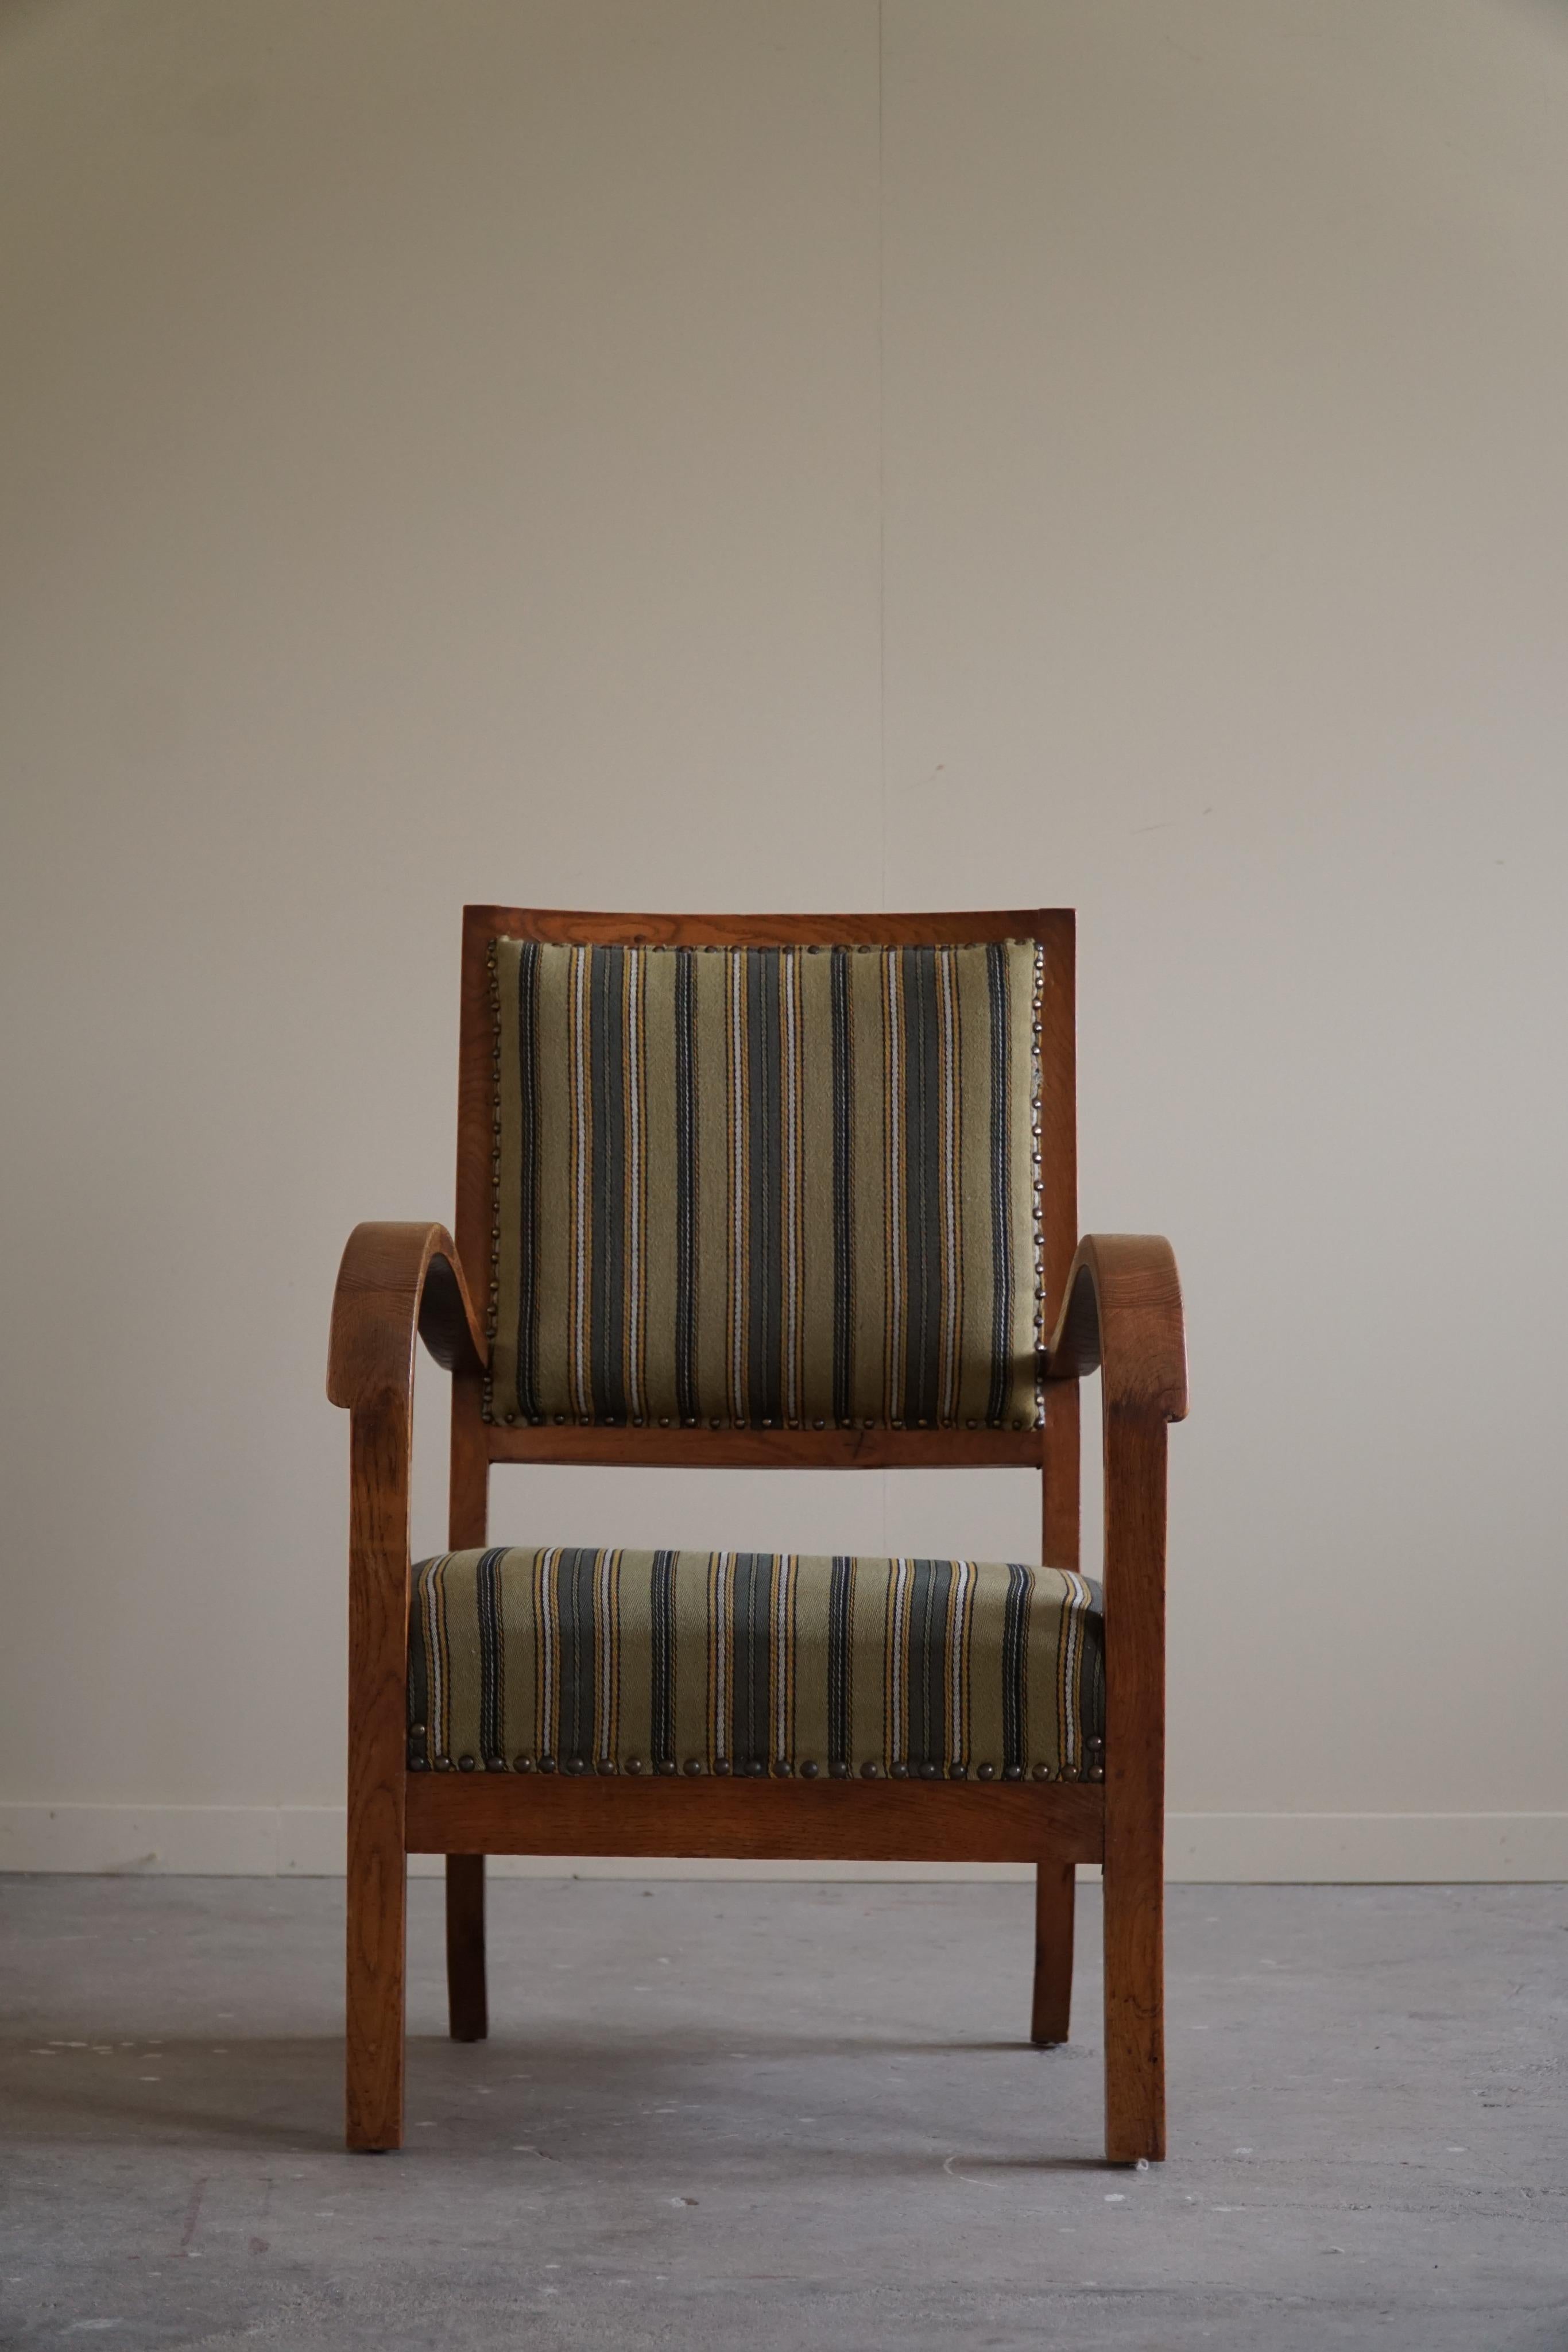 Armchair in Oak & Fabric, Danish Mid-Century Modern Cabinetmaker, 1950s For Sale 1